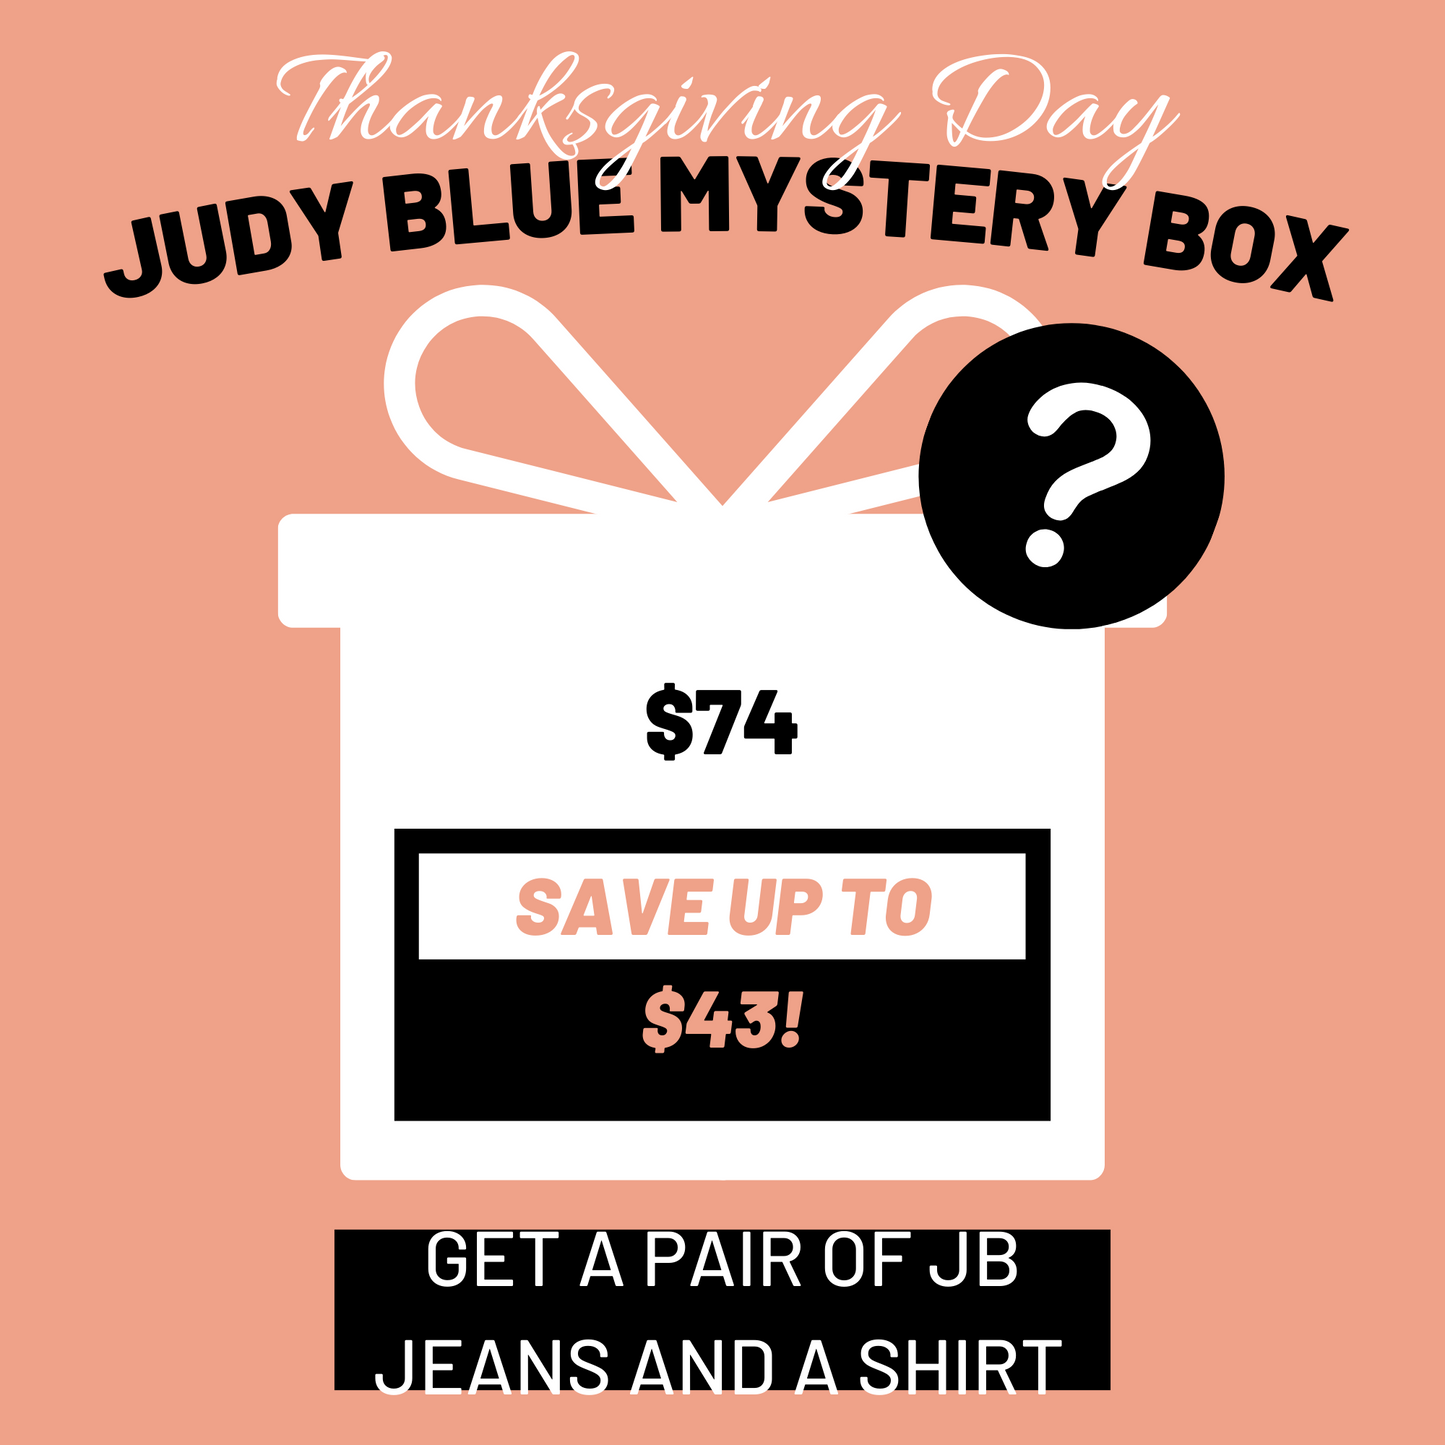 Judy Blue Mystery Bag